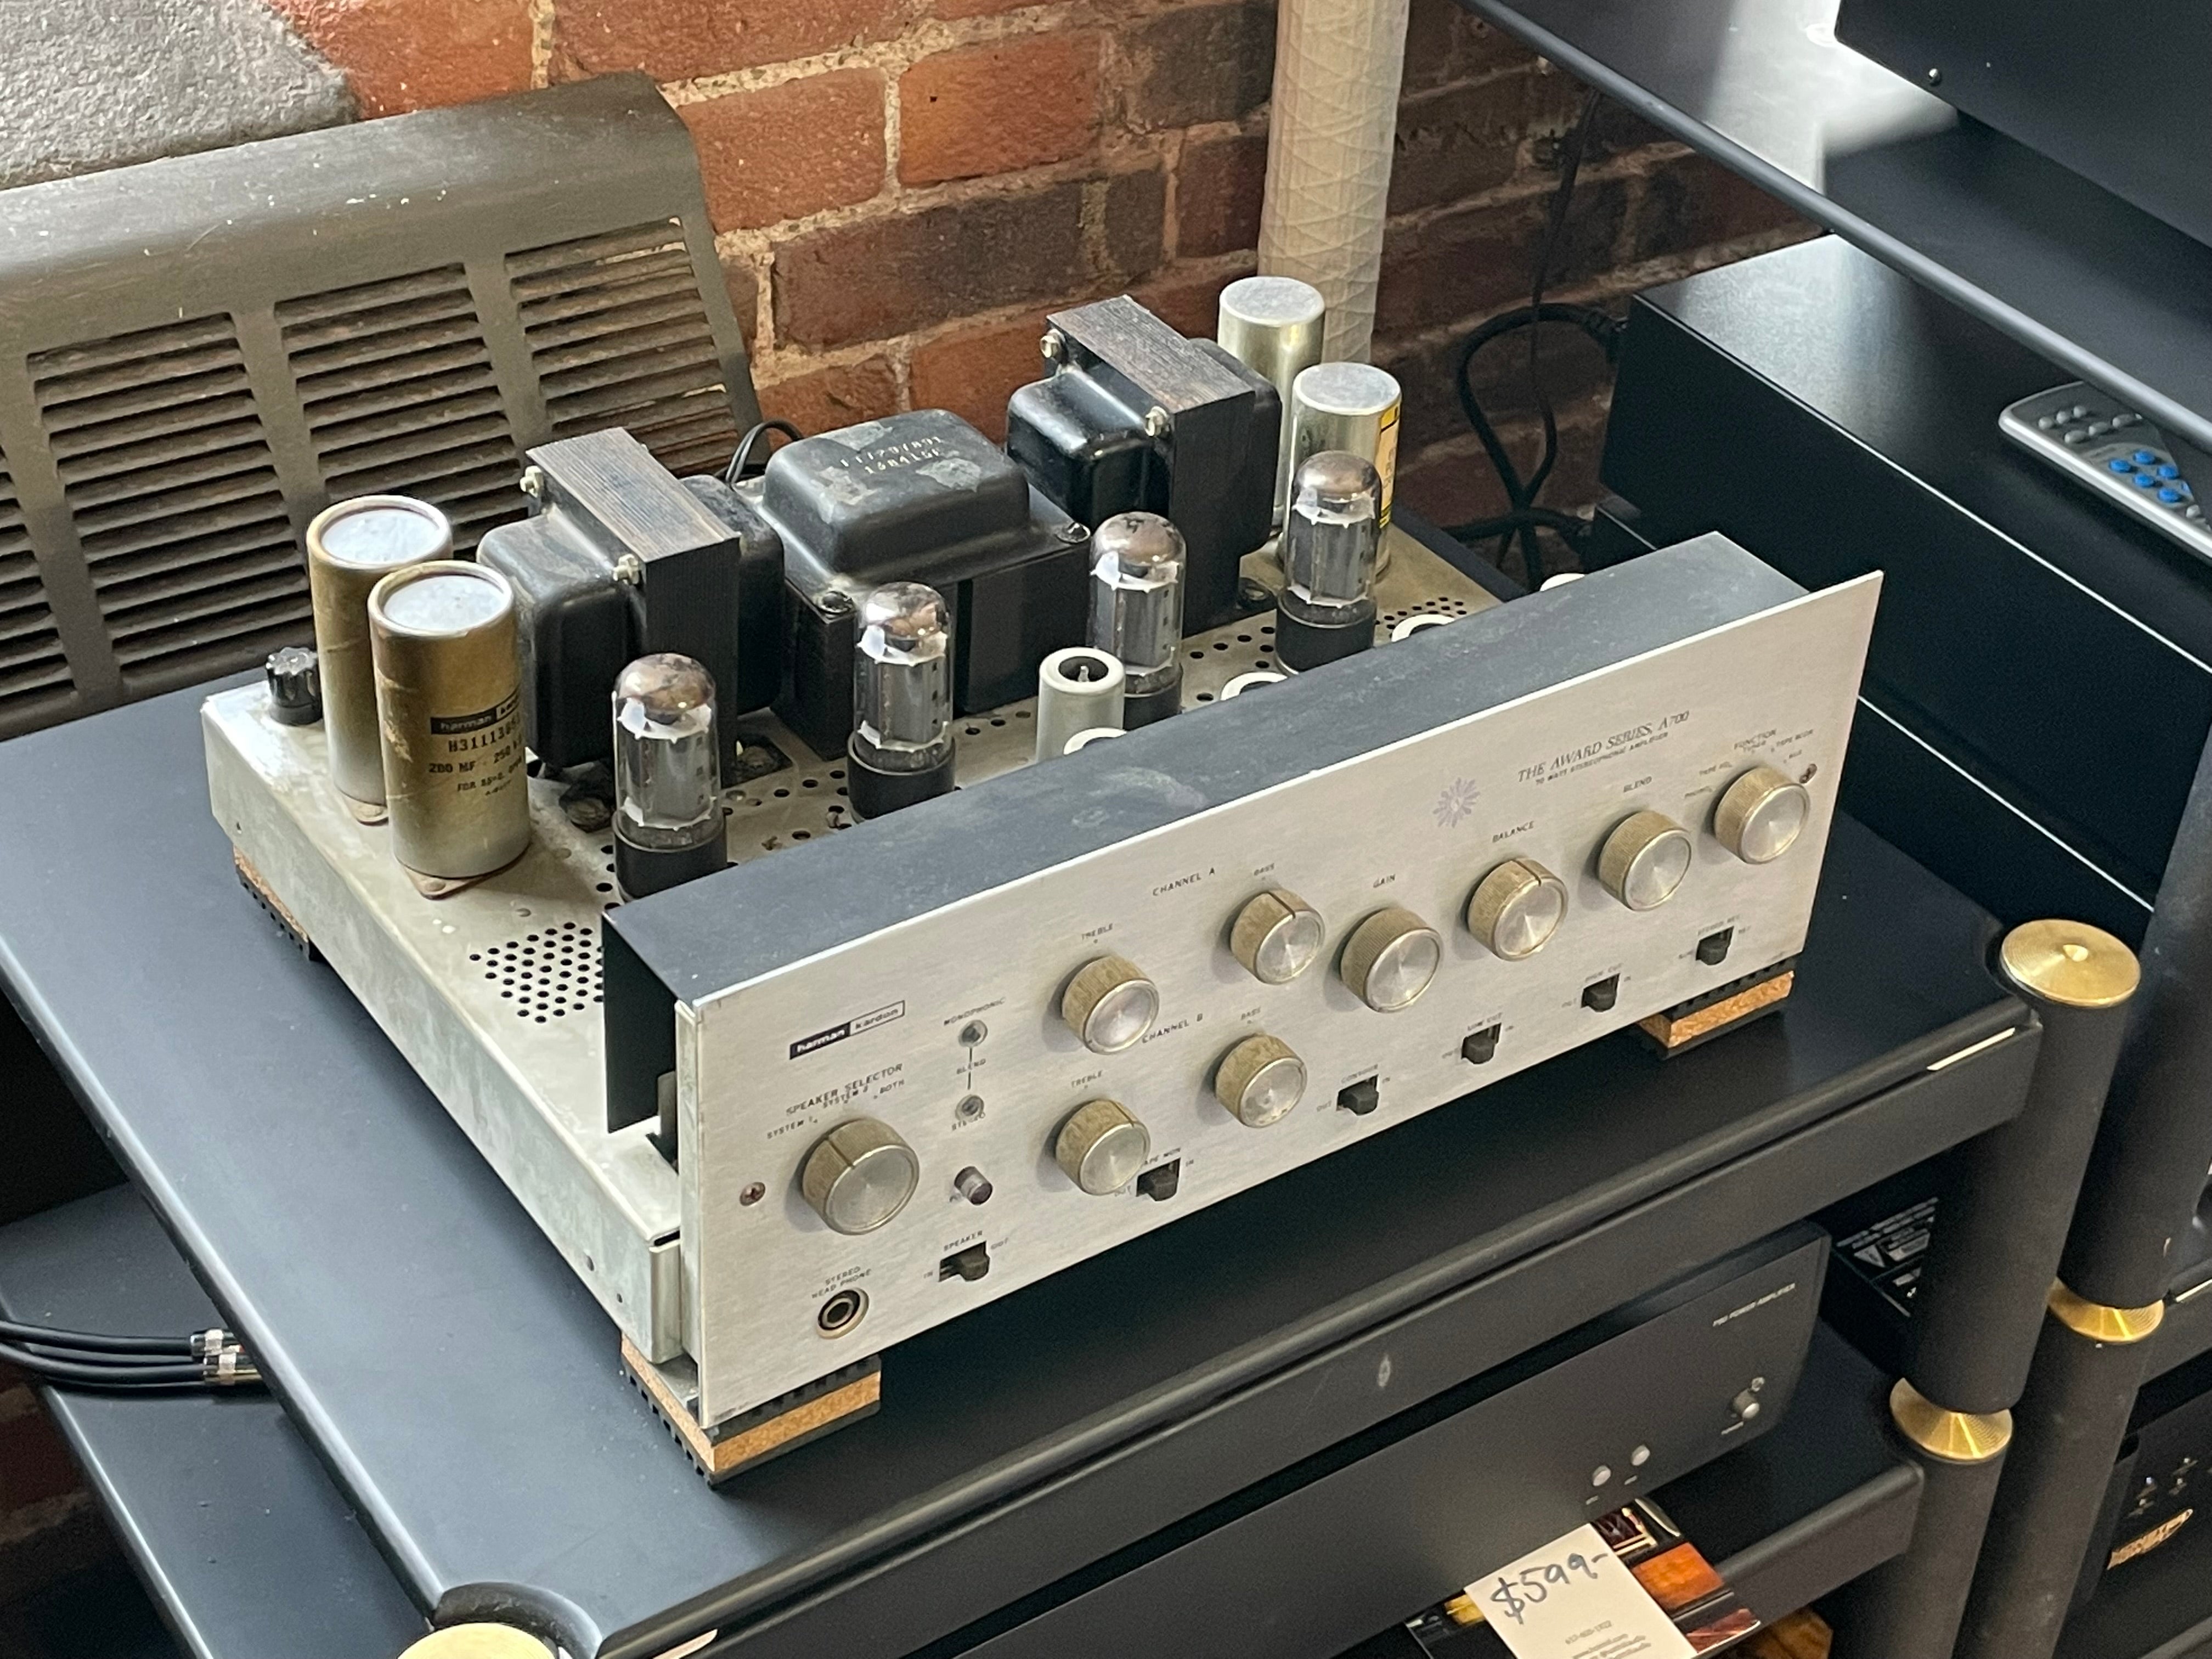 Harman Kardon, The Award Series, A700 Integrated Amplifier - "Wonderful" - SOLD